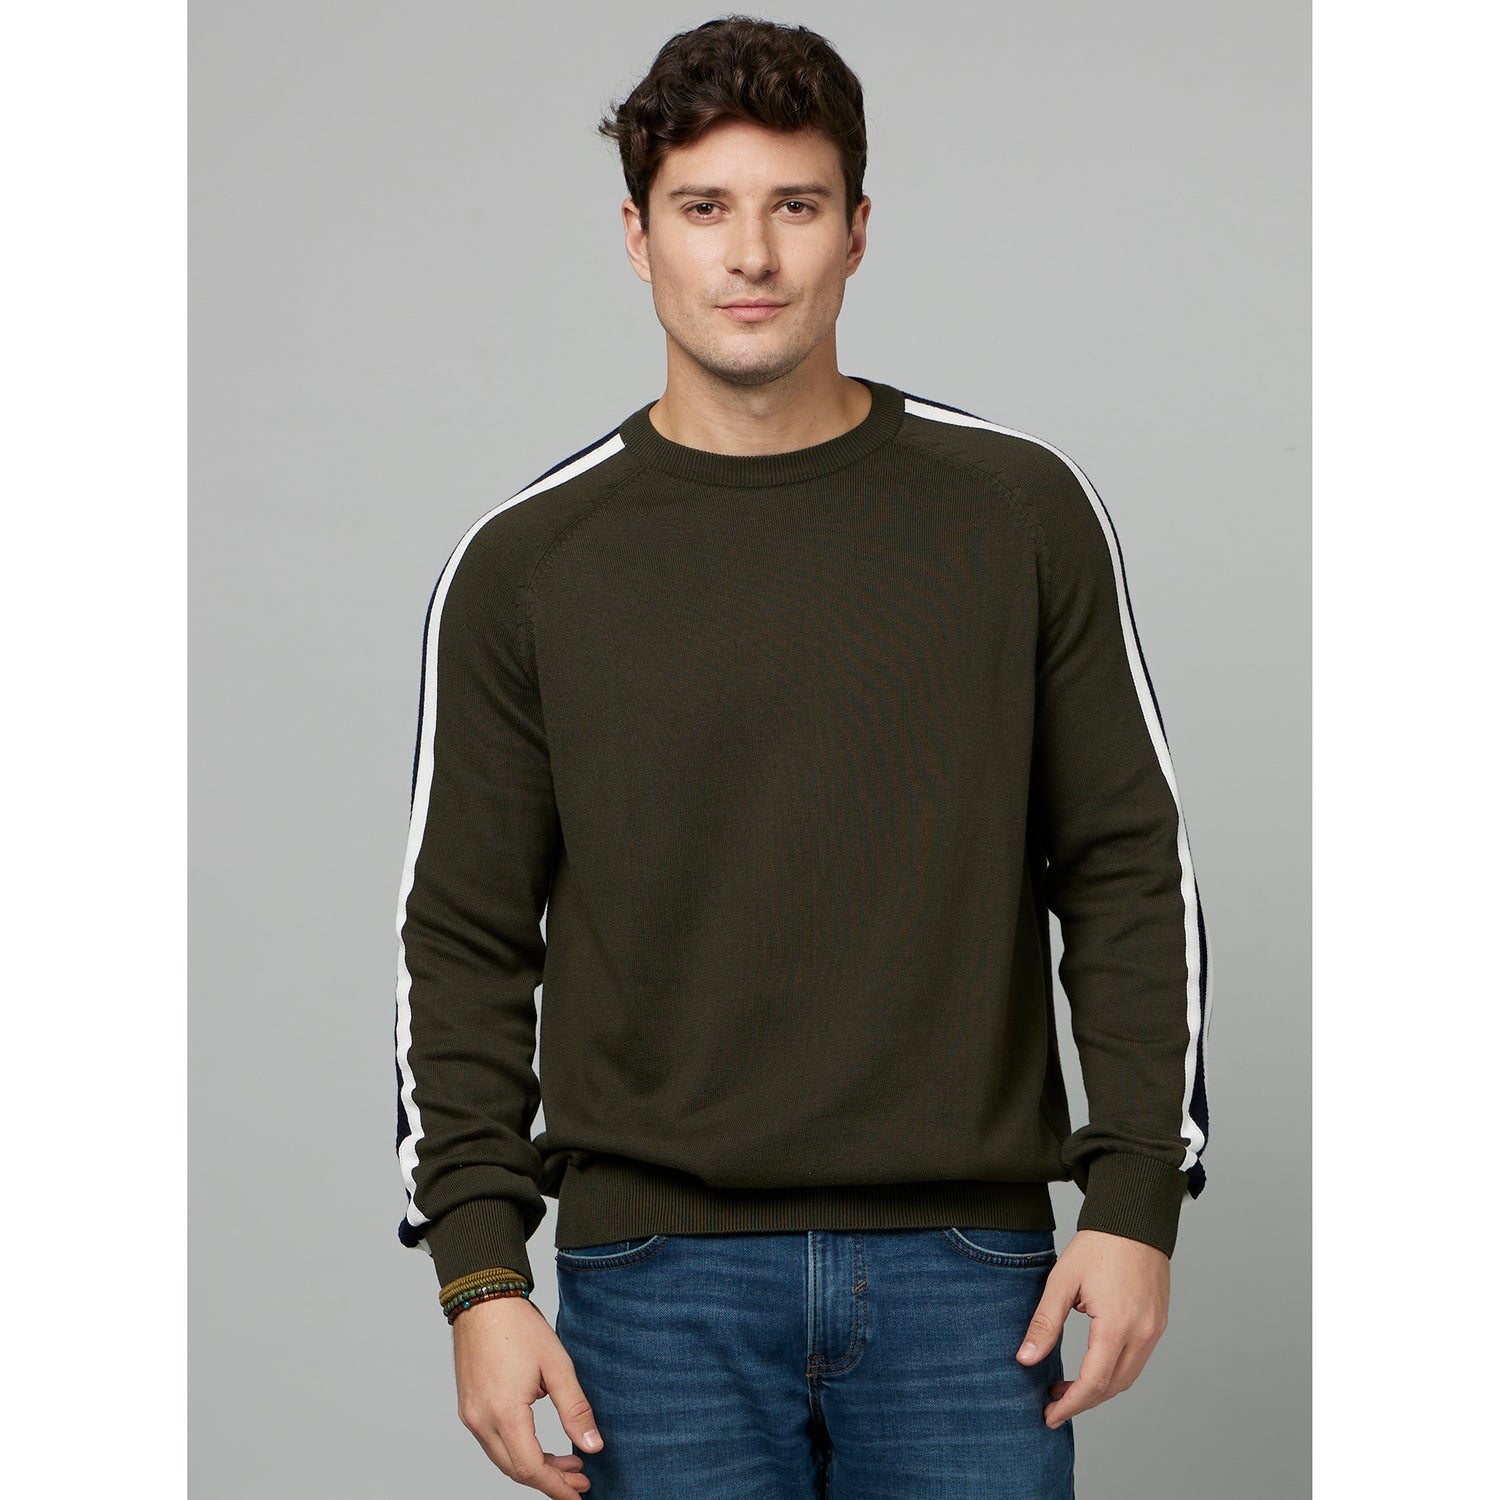 Olive Green Striped Cotton Pullover Sweater (FERITAS)